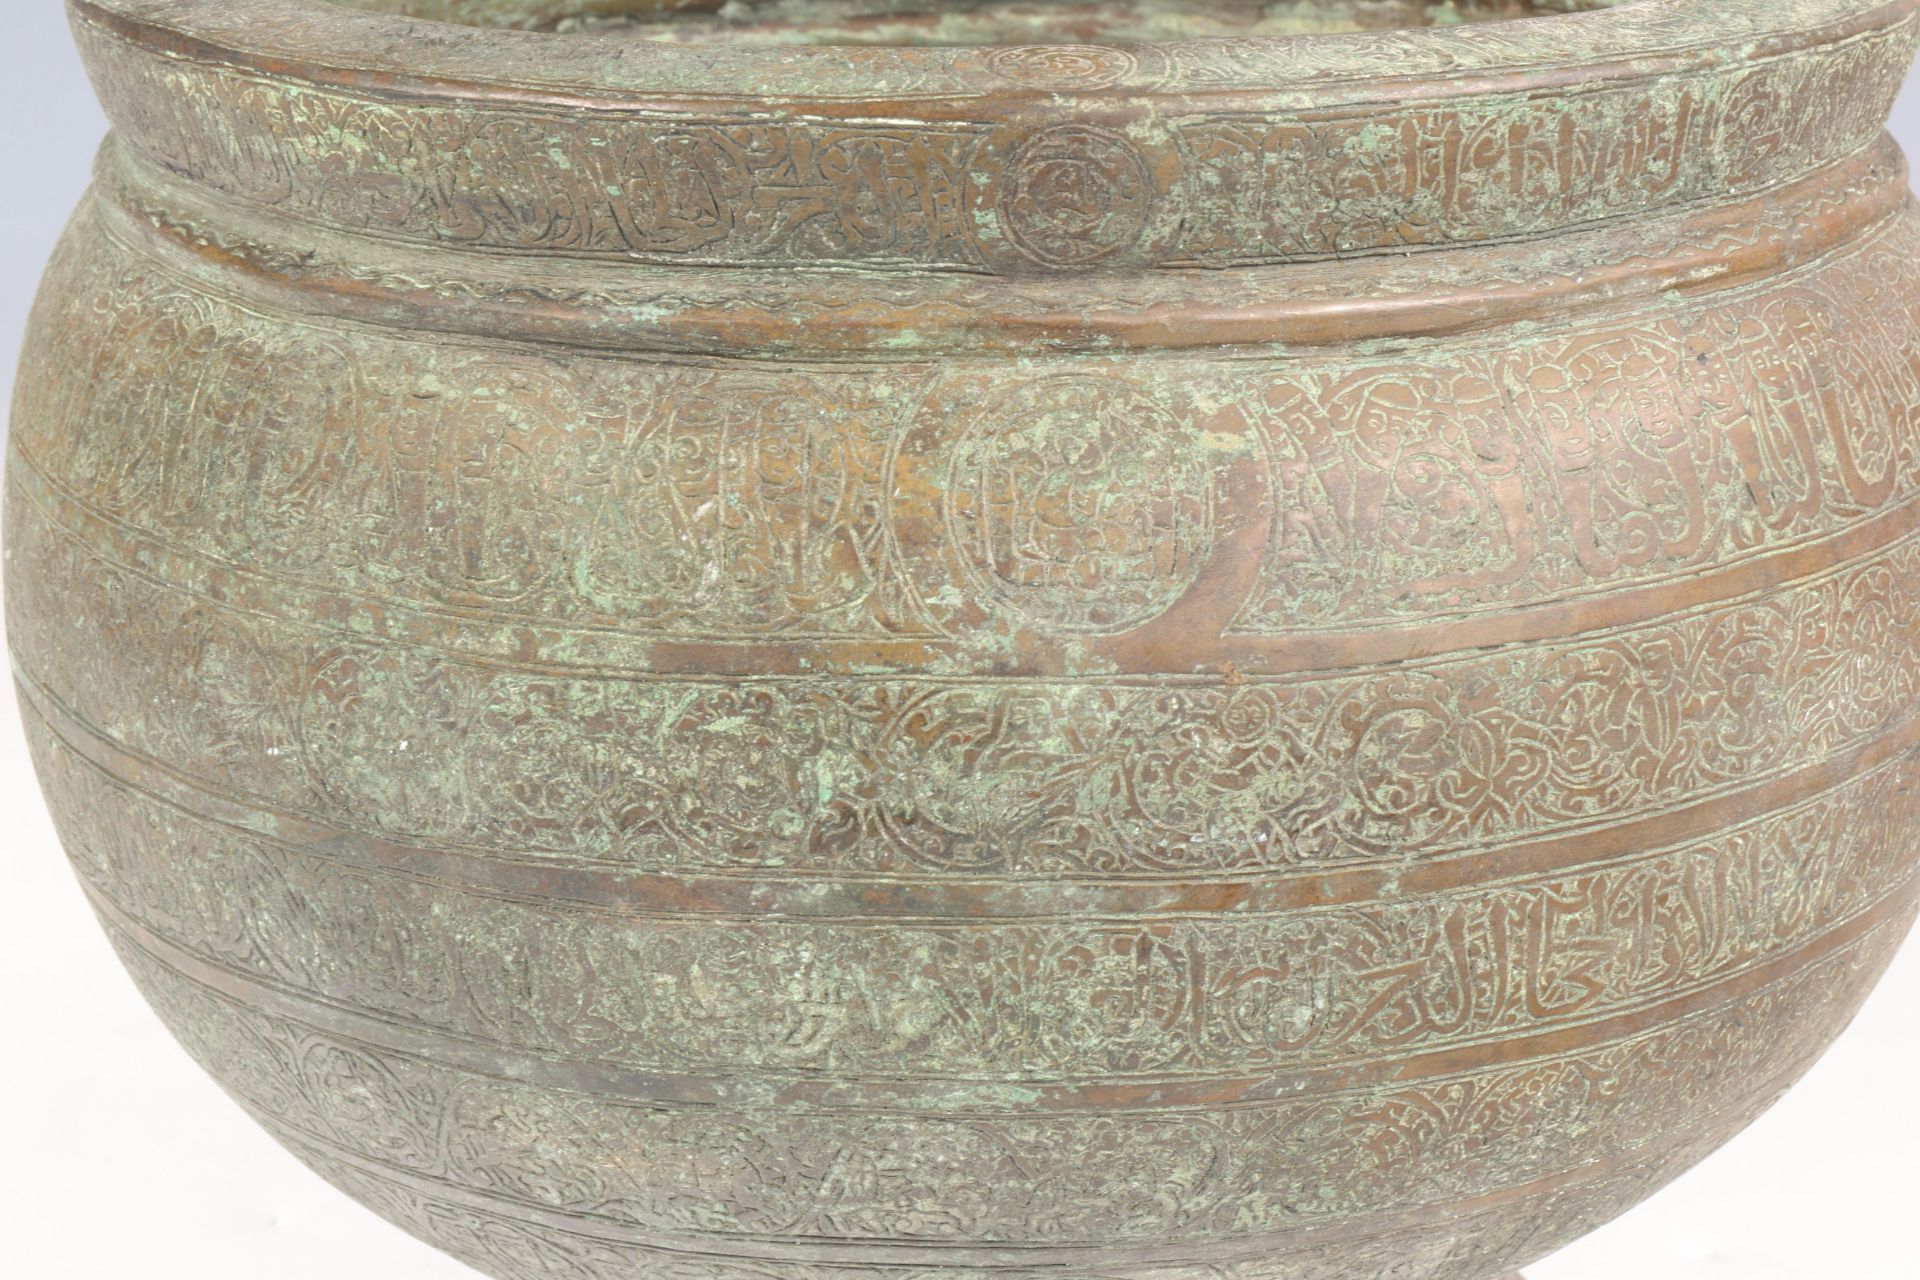 A Persian bronze tripot cauldron, Khorasan, 13th century or later. - Image 3 of 4